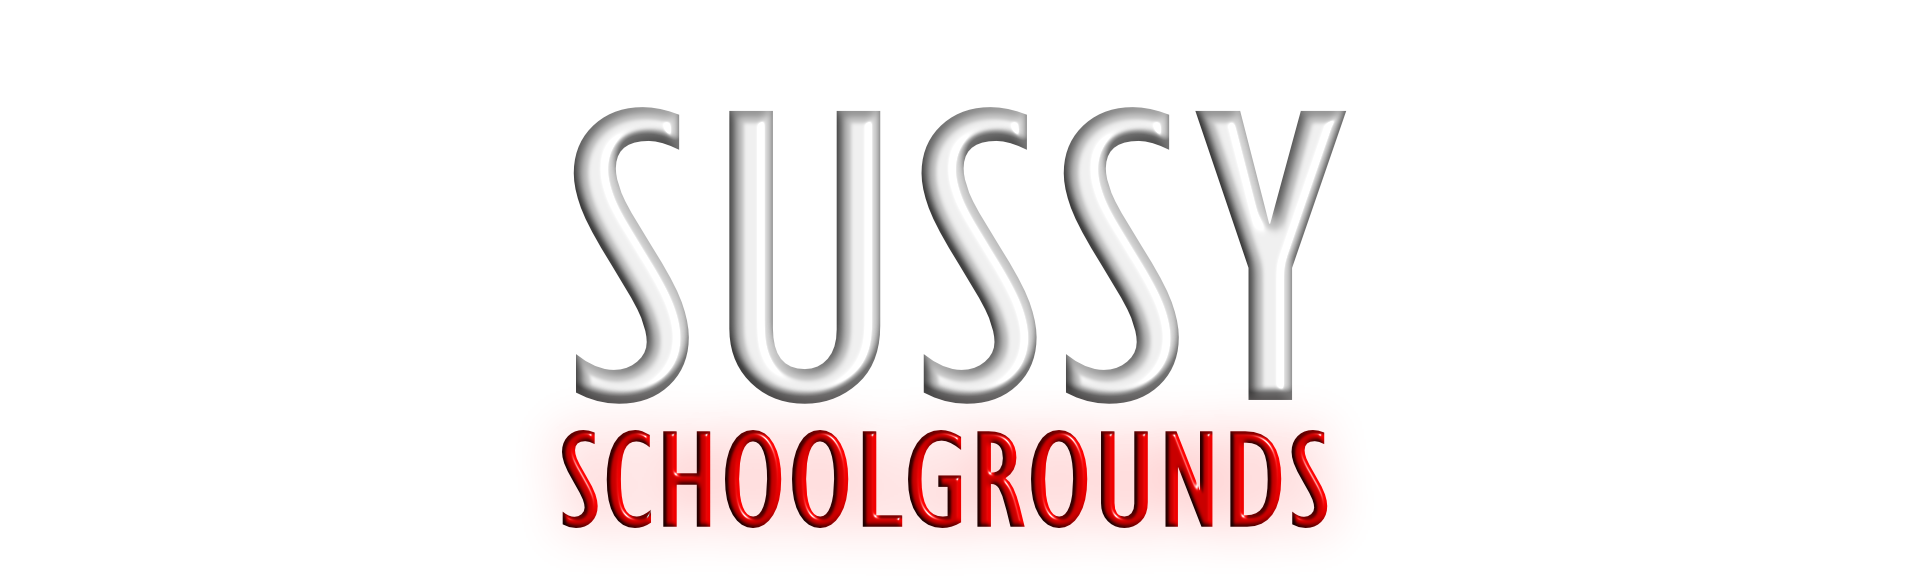 Sussy Schoolgrounds RTX